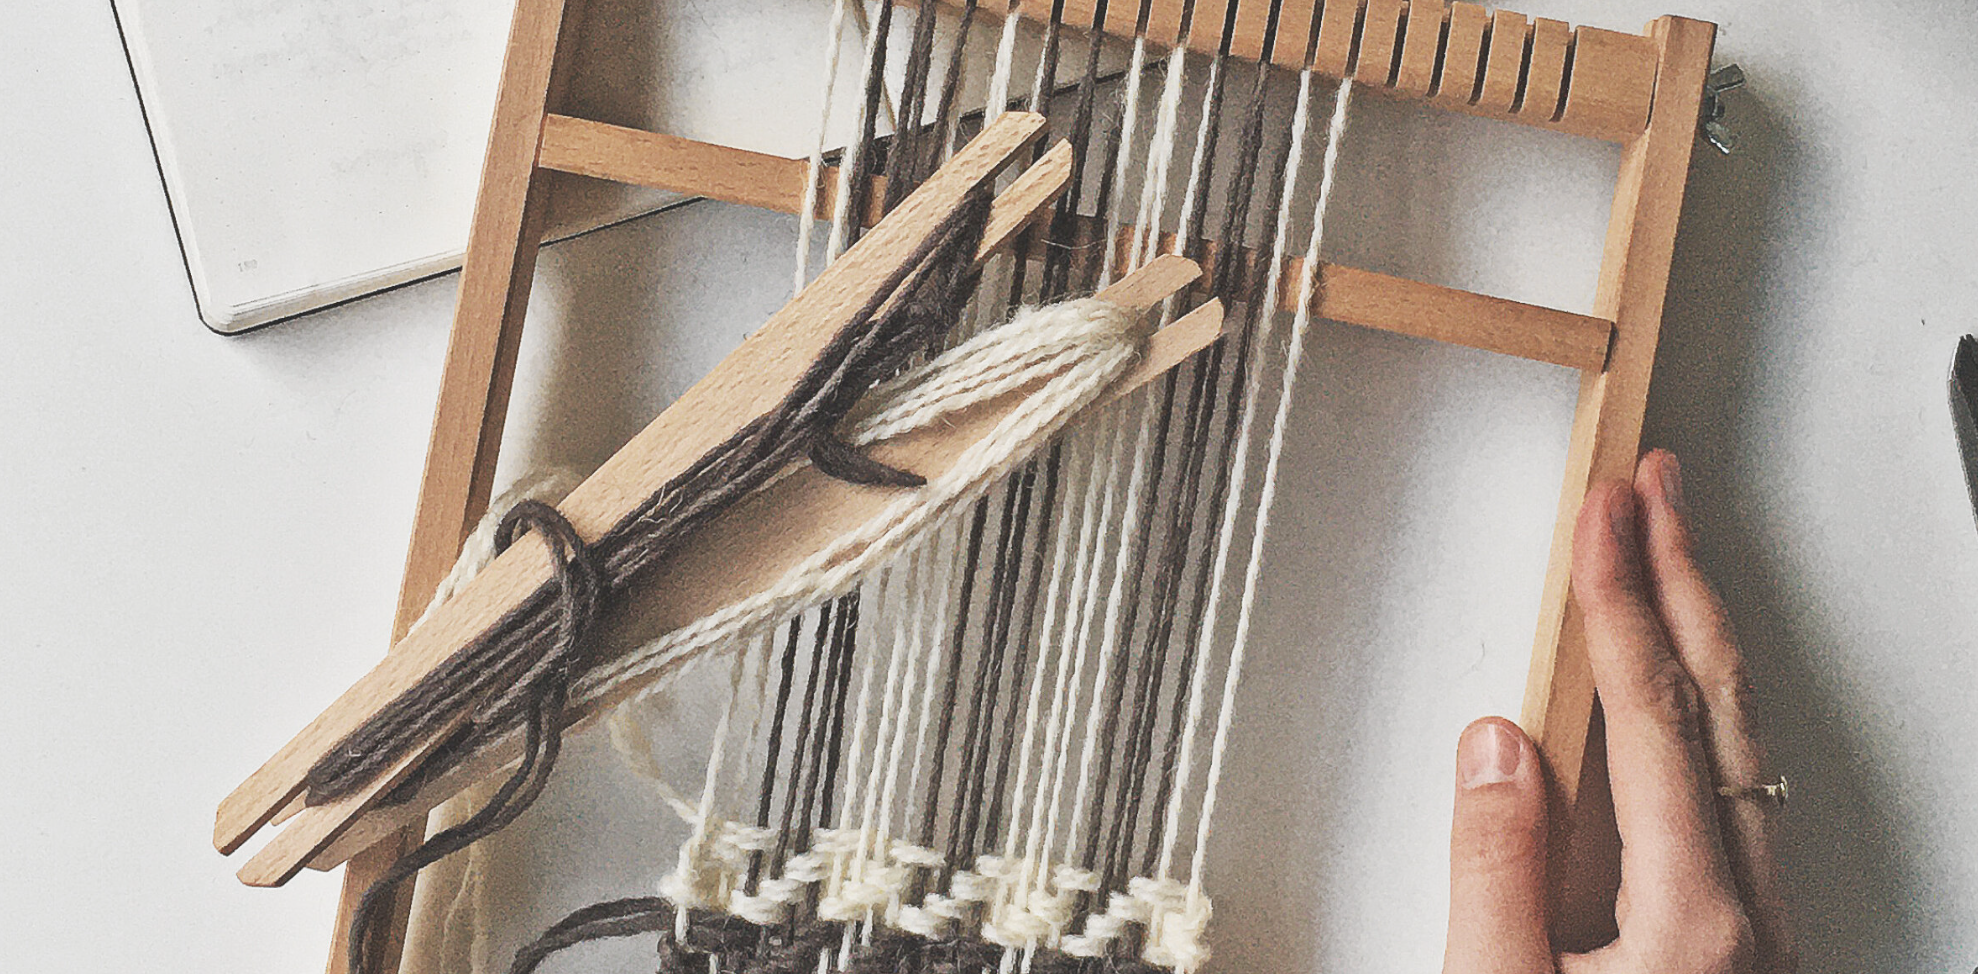 How To Make a DIY Mini Loom  Weaving loom projects, Weaving loom diy,  Weaving projects